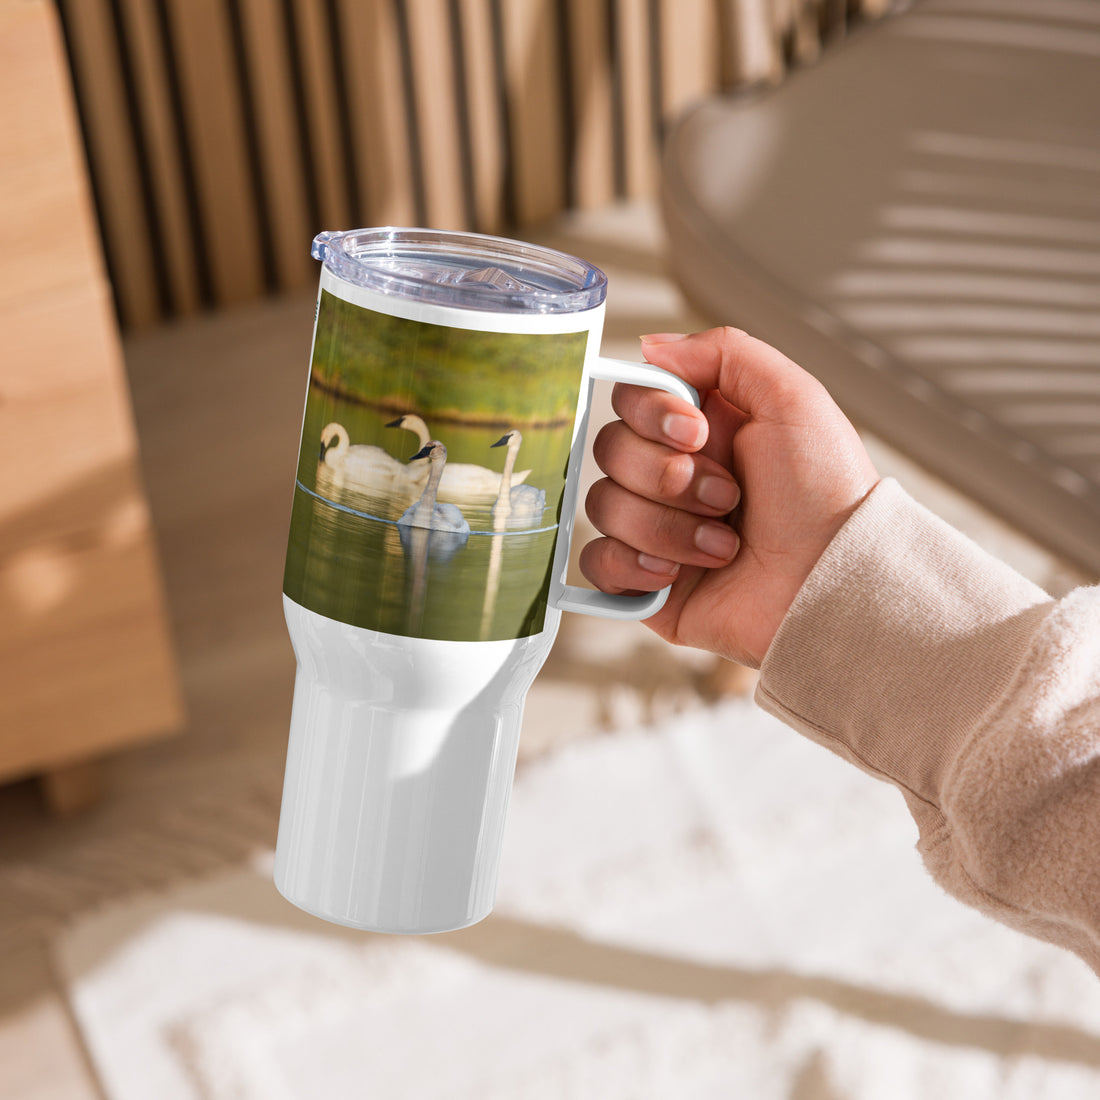 Swans Travel mug with a handle